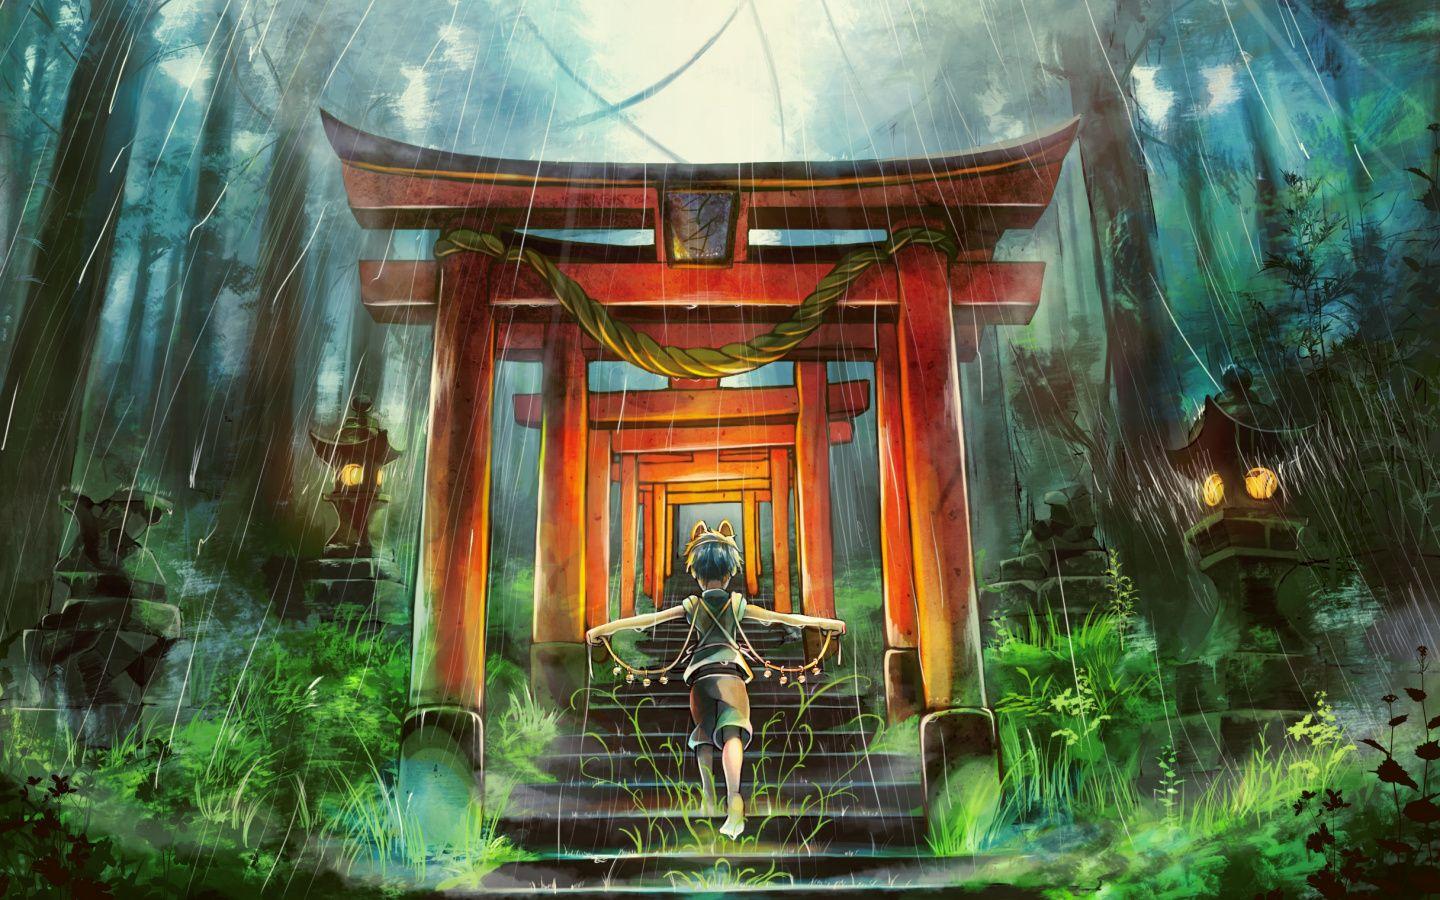 Anime Shrine Wallpapers - Top Free Anime Shrine Backgrounds ...